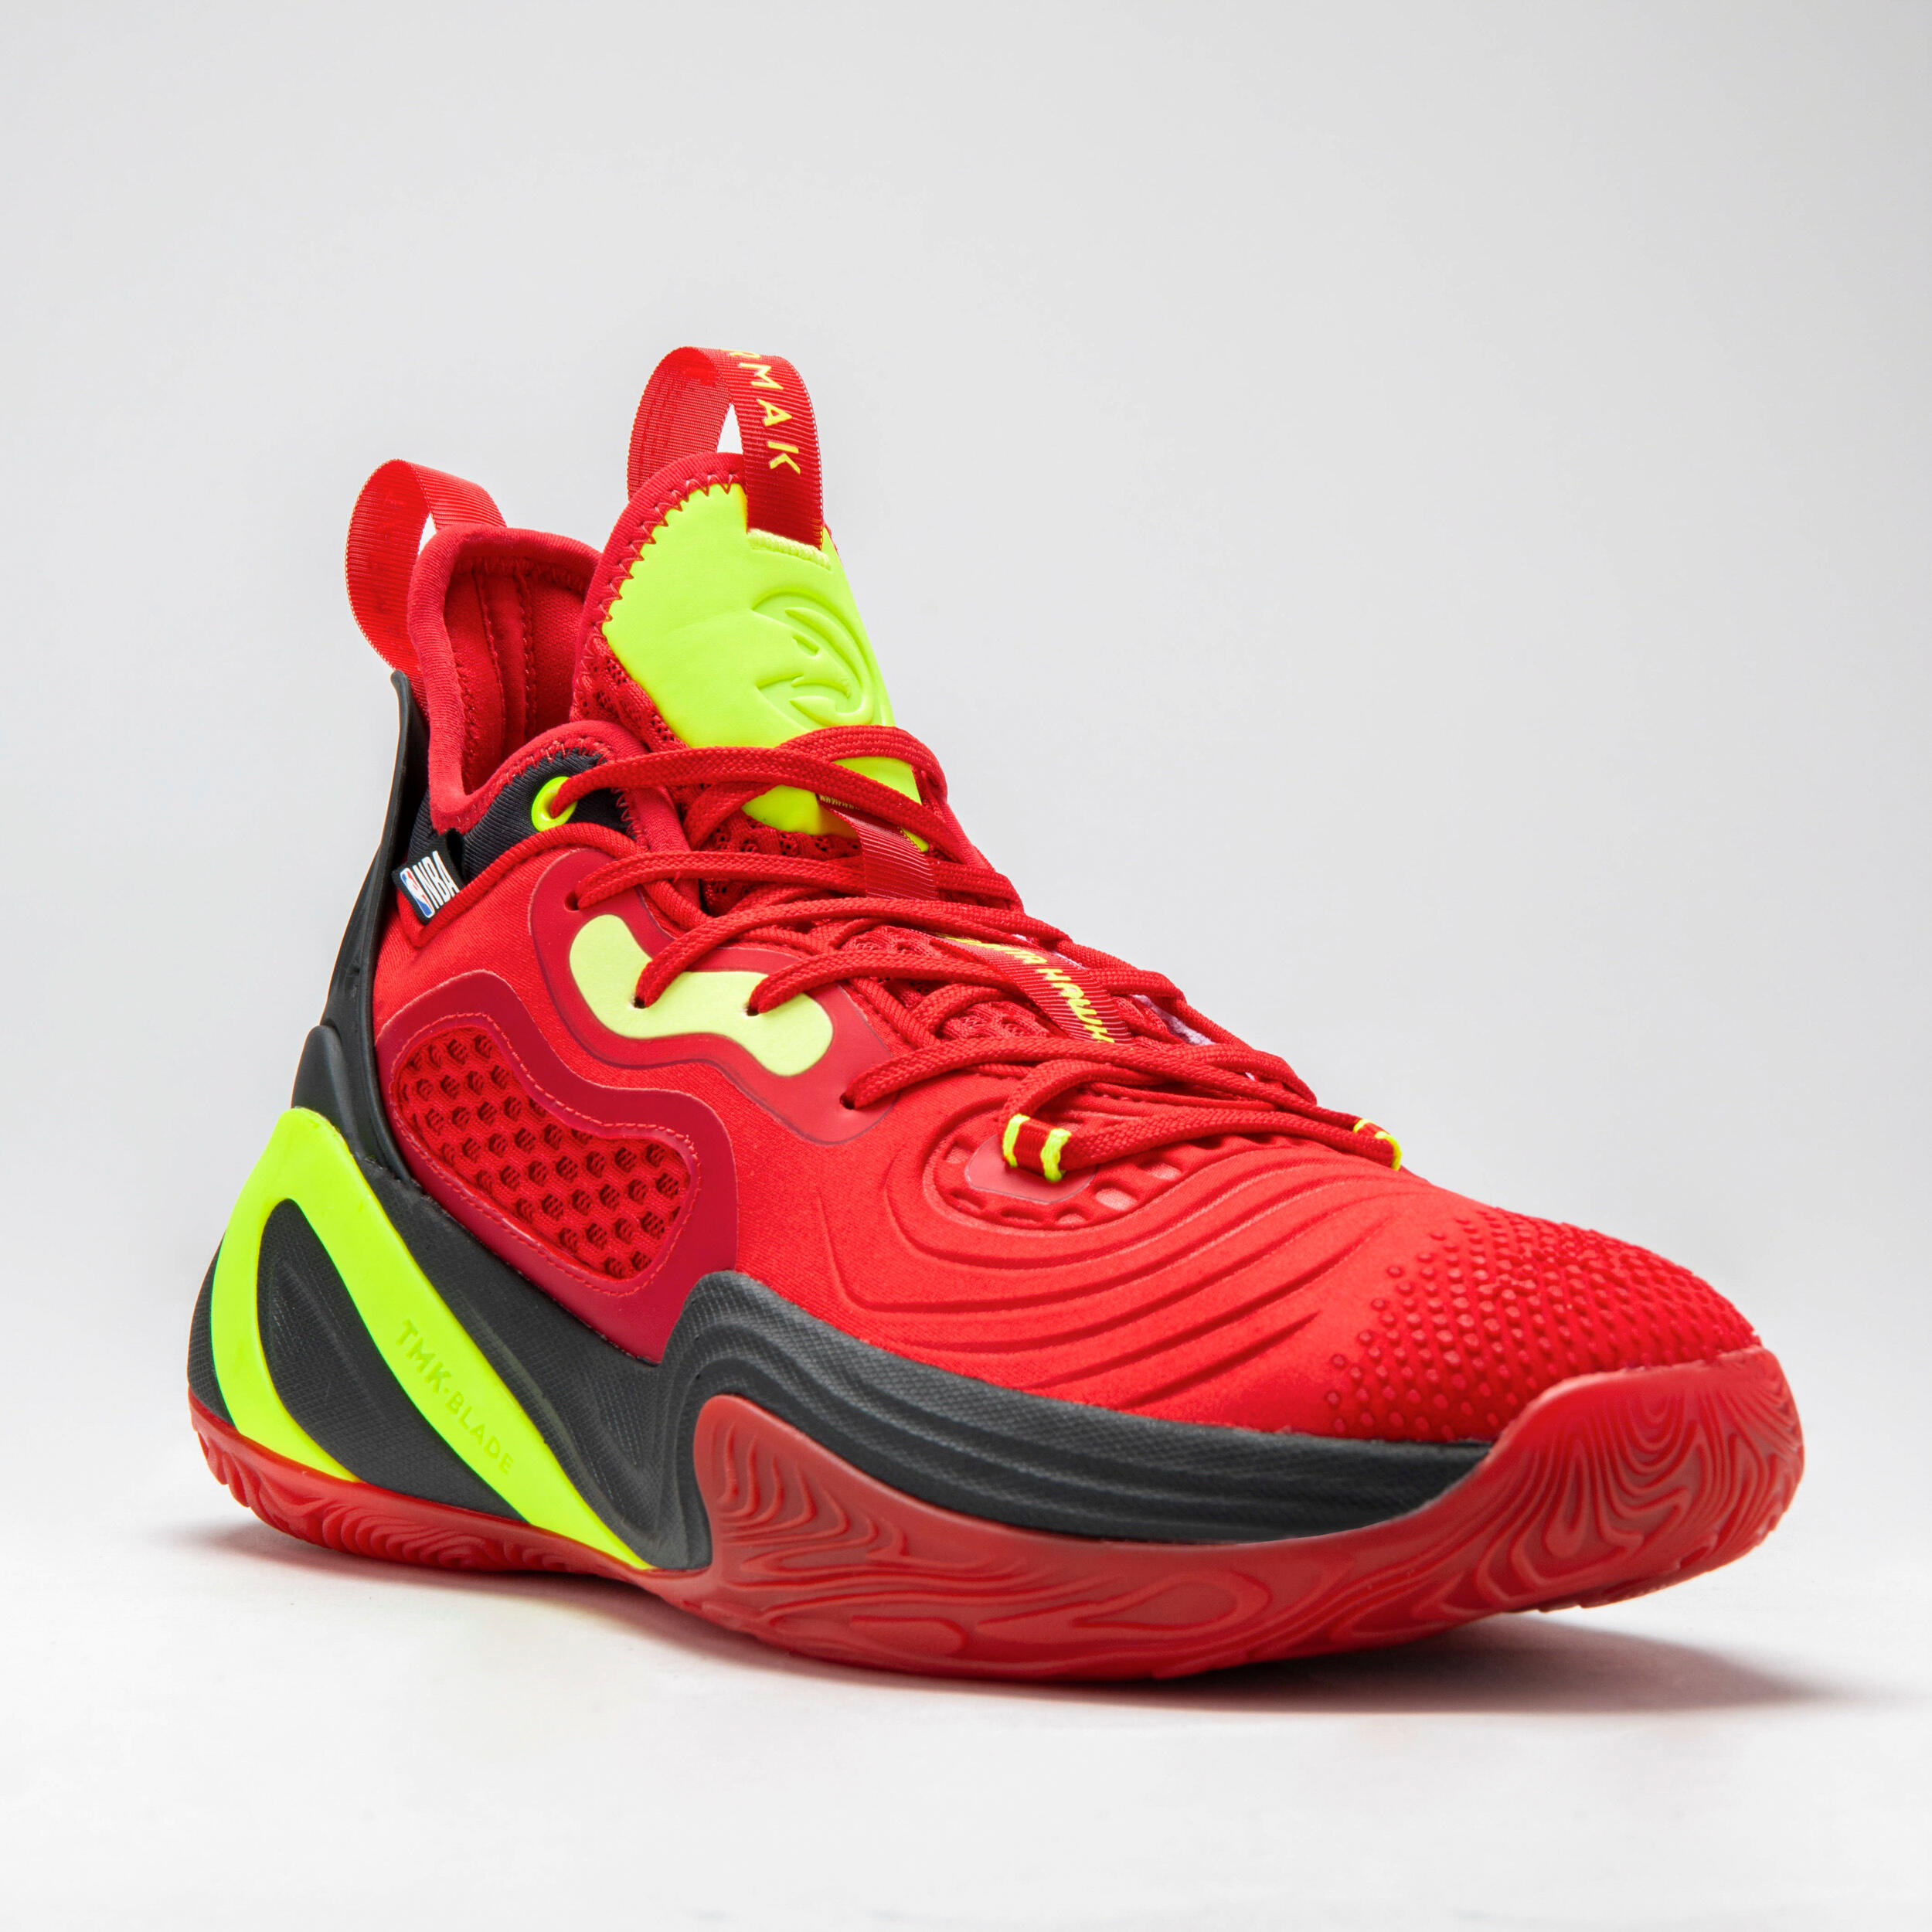 Men's/Women's Basketball Shoes SE900 - NBA Atlanta Hawks/Red 3/16